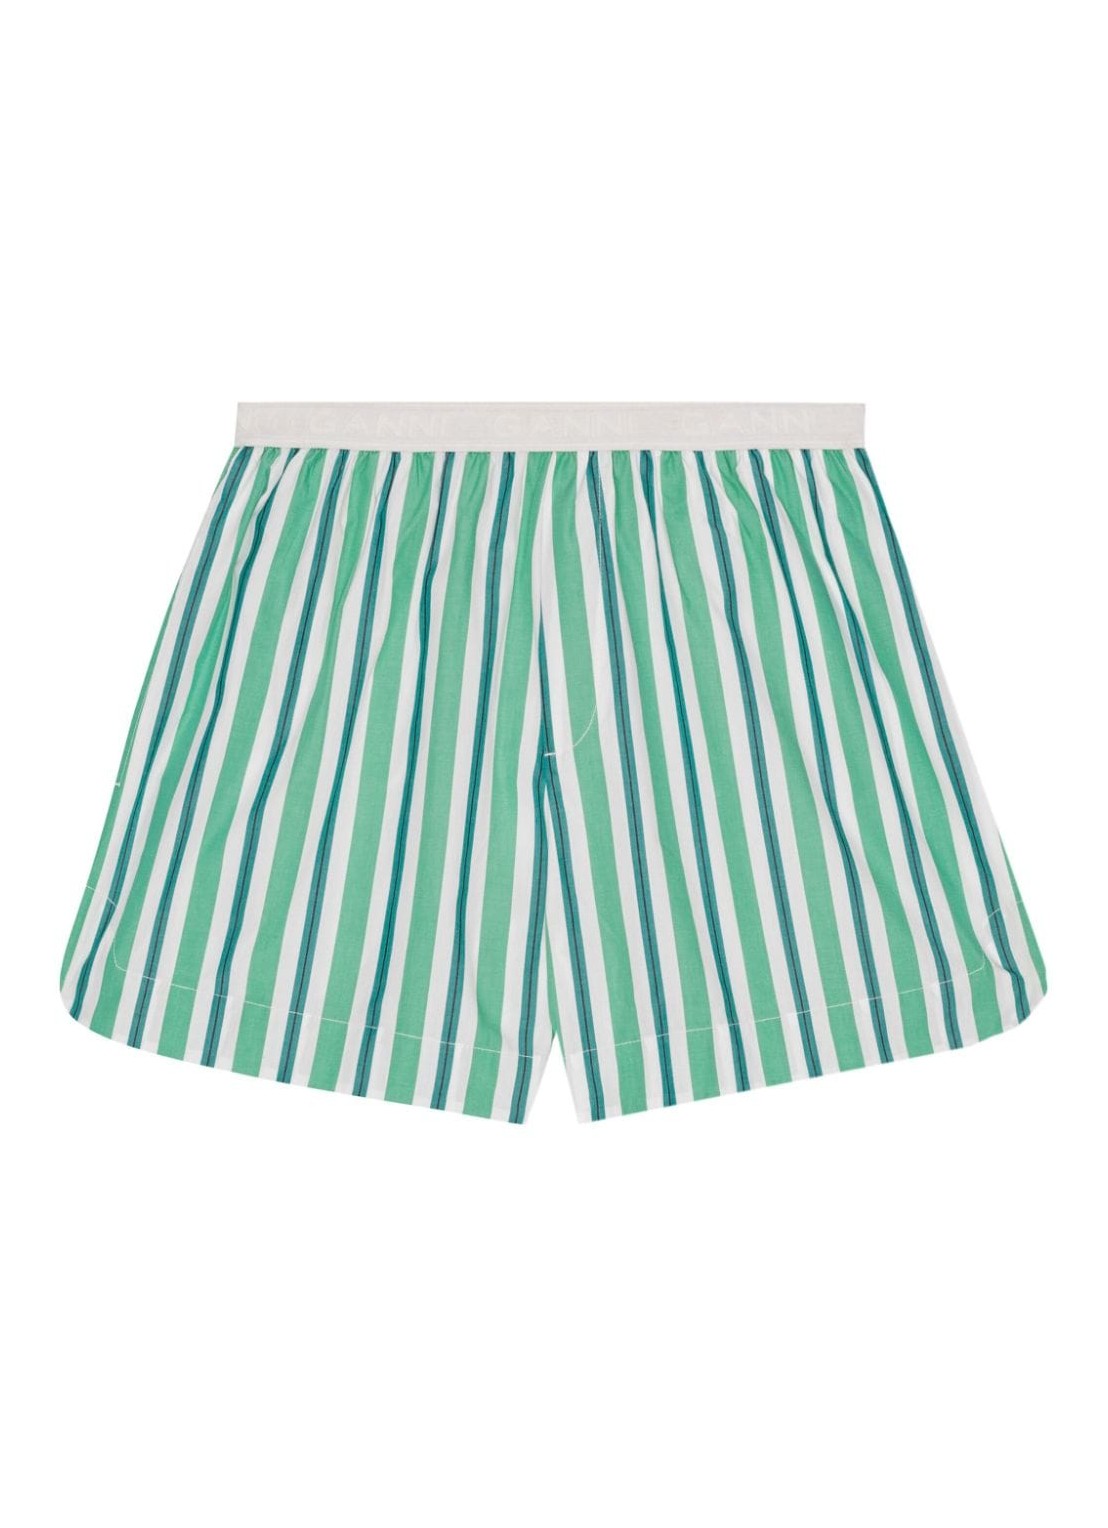 Pantalon corto ganni short pant womanstripe cotton elasticated shorts - f8925 879 talla 42
 